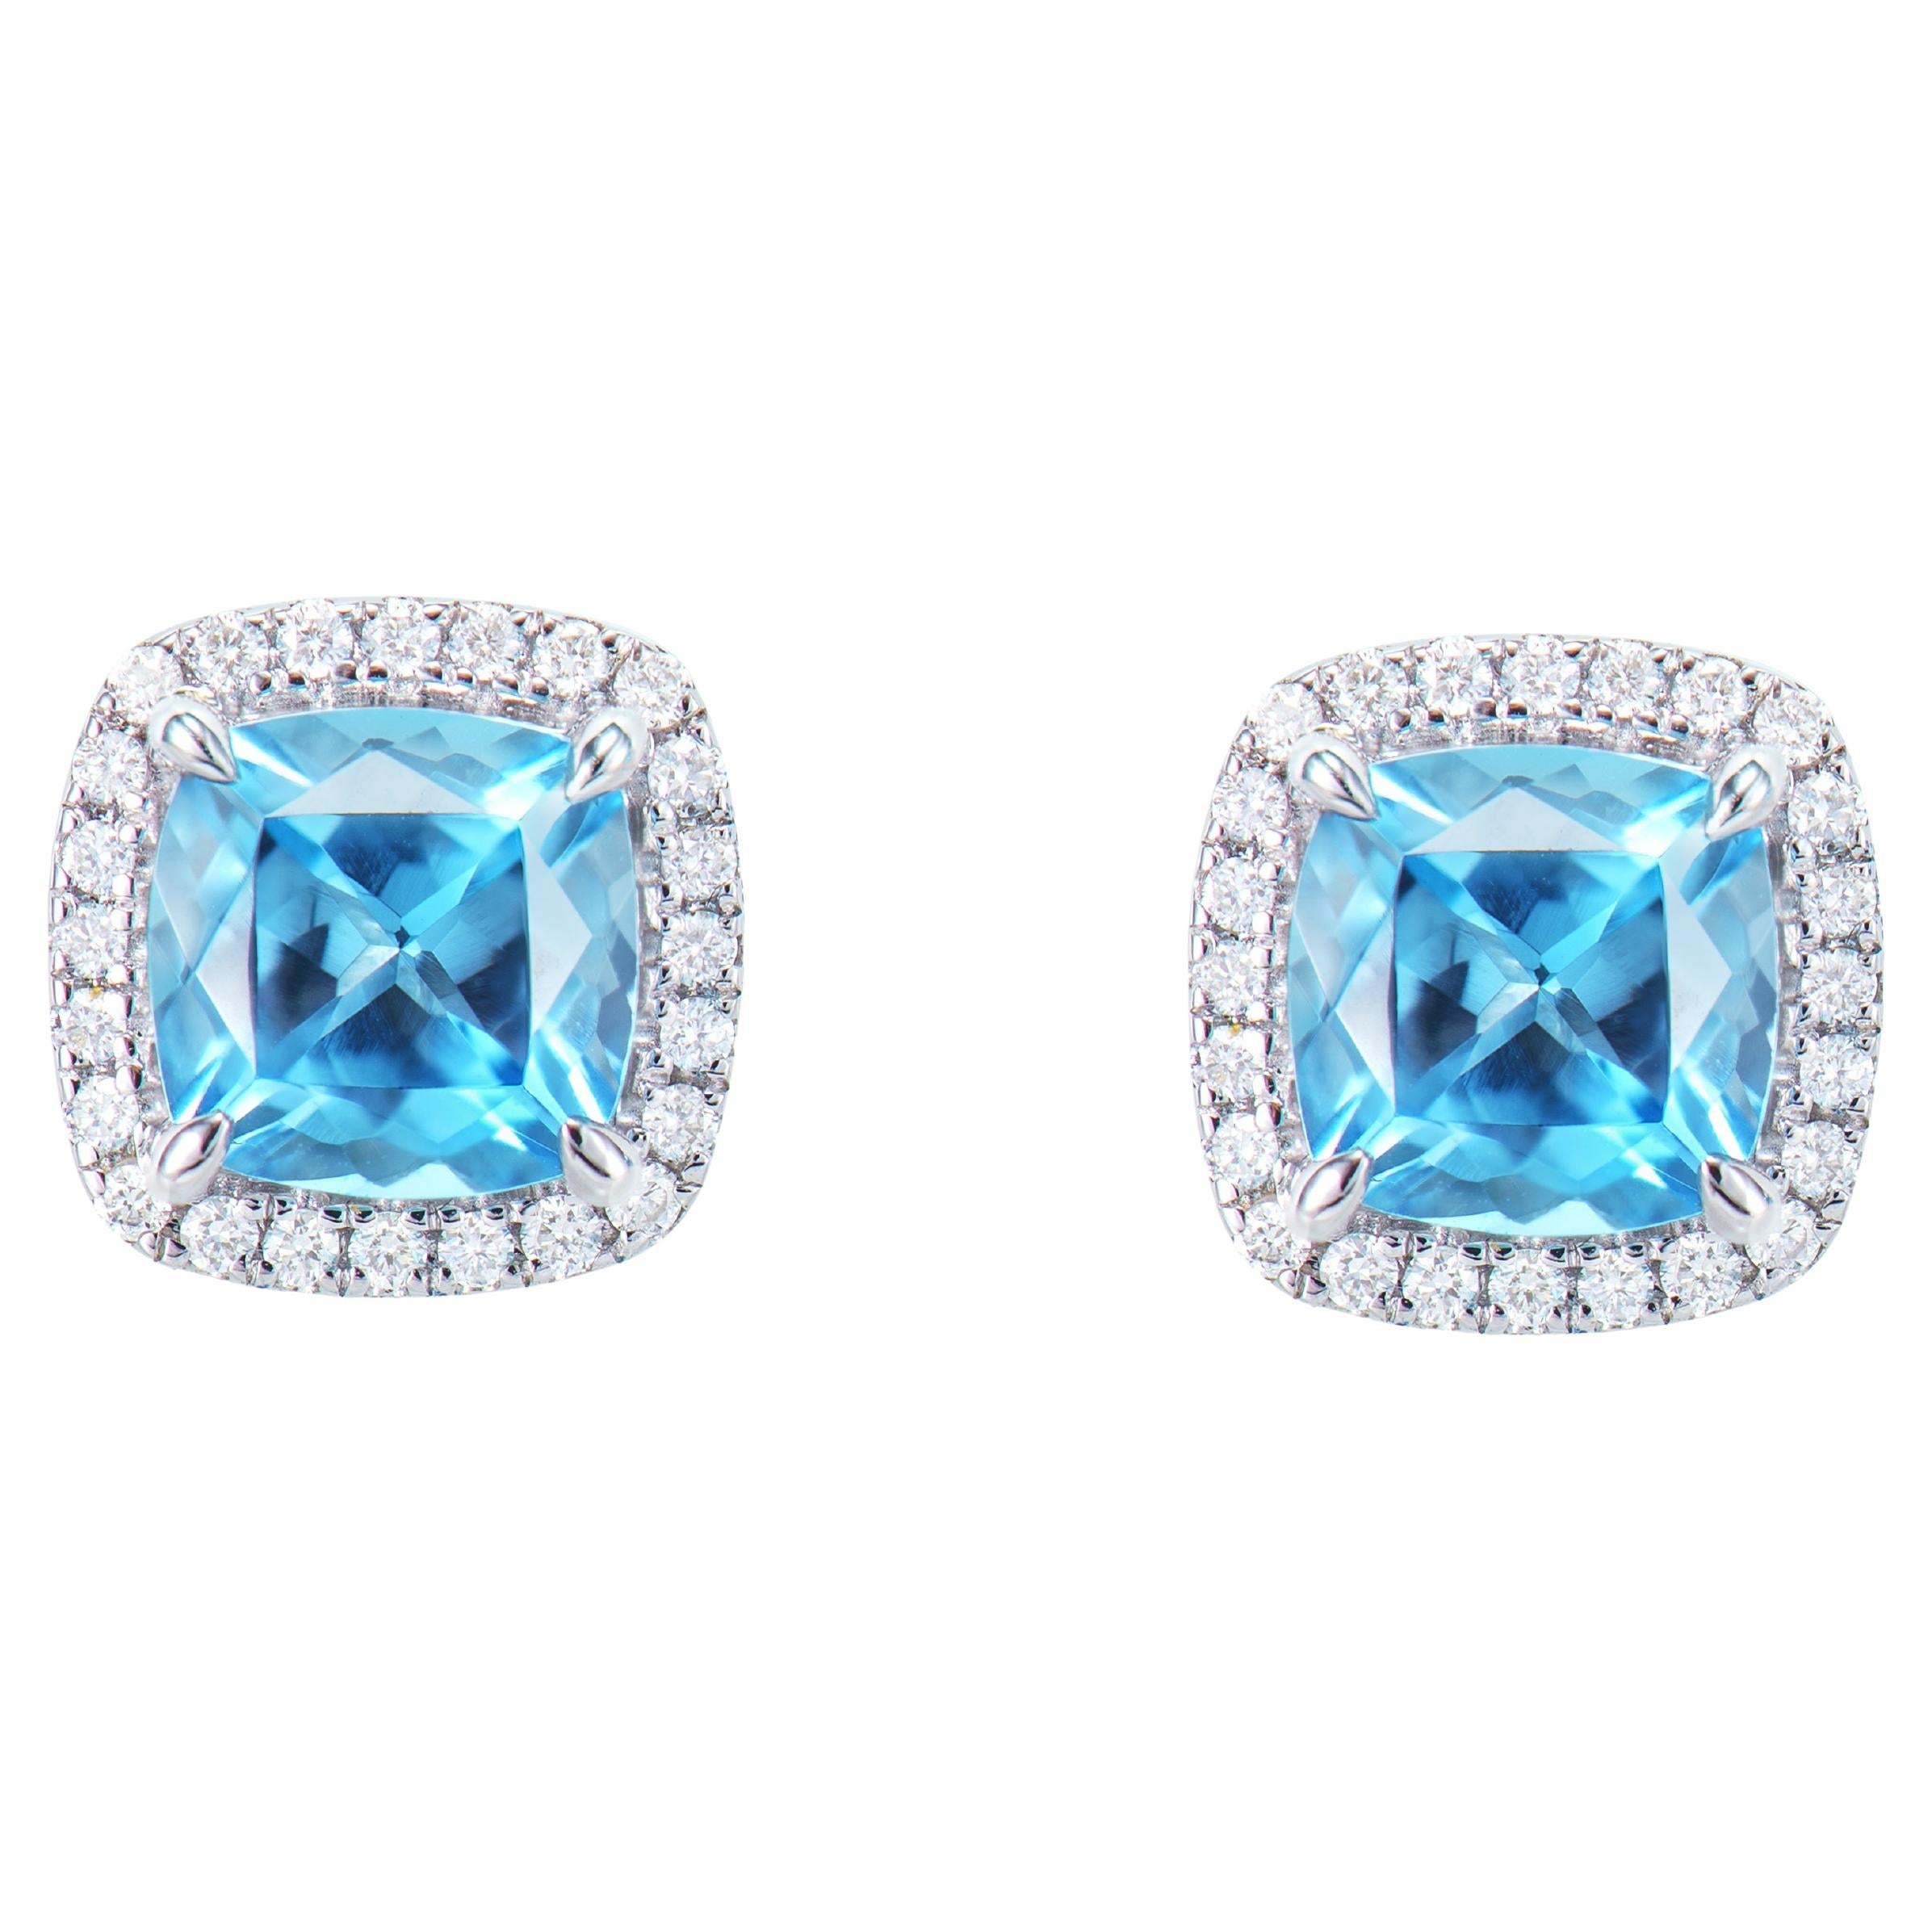 2.28 Carat Swiss Blue Topaz Stud Earrings in 18KWG with White Diamond. For Sale